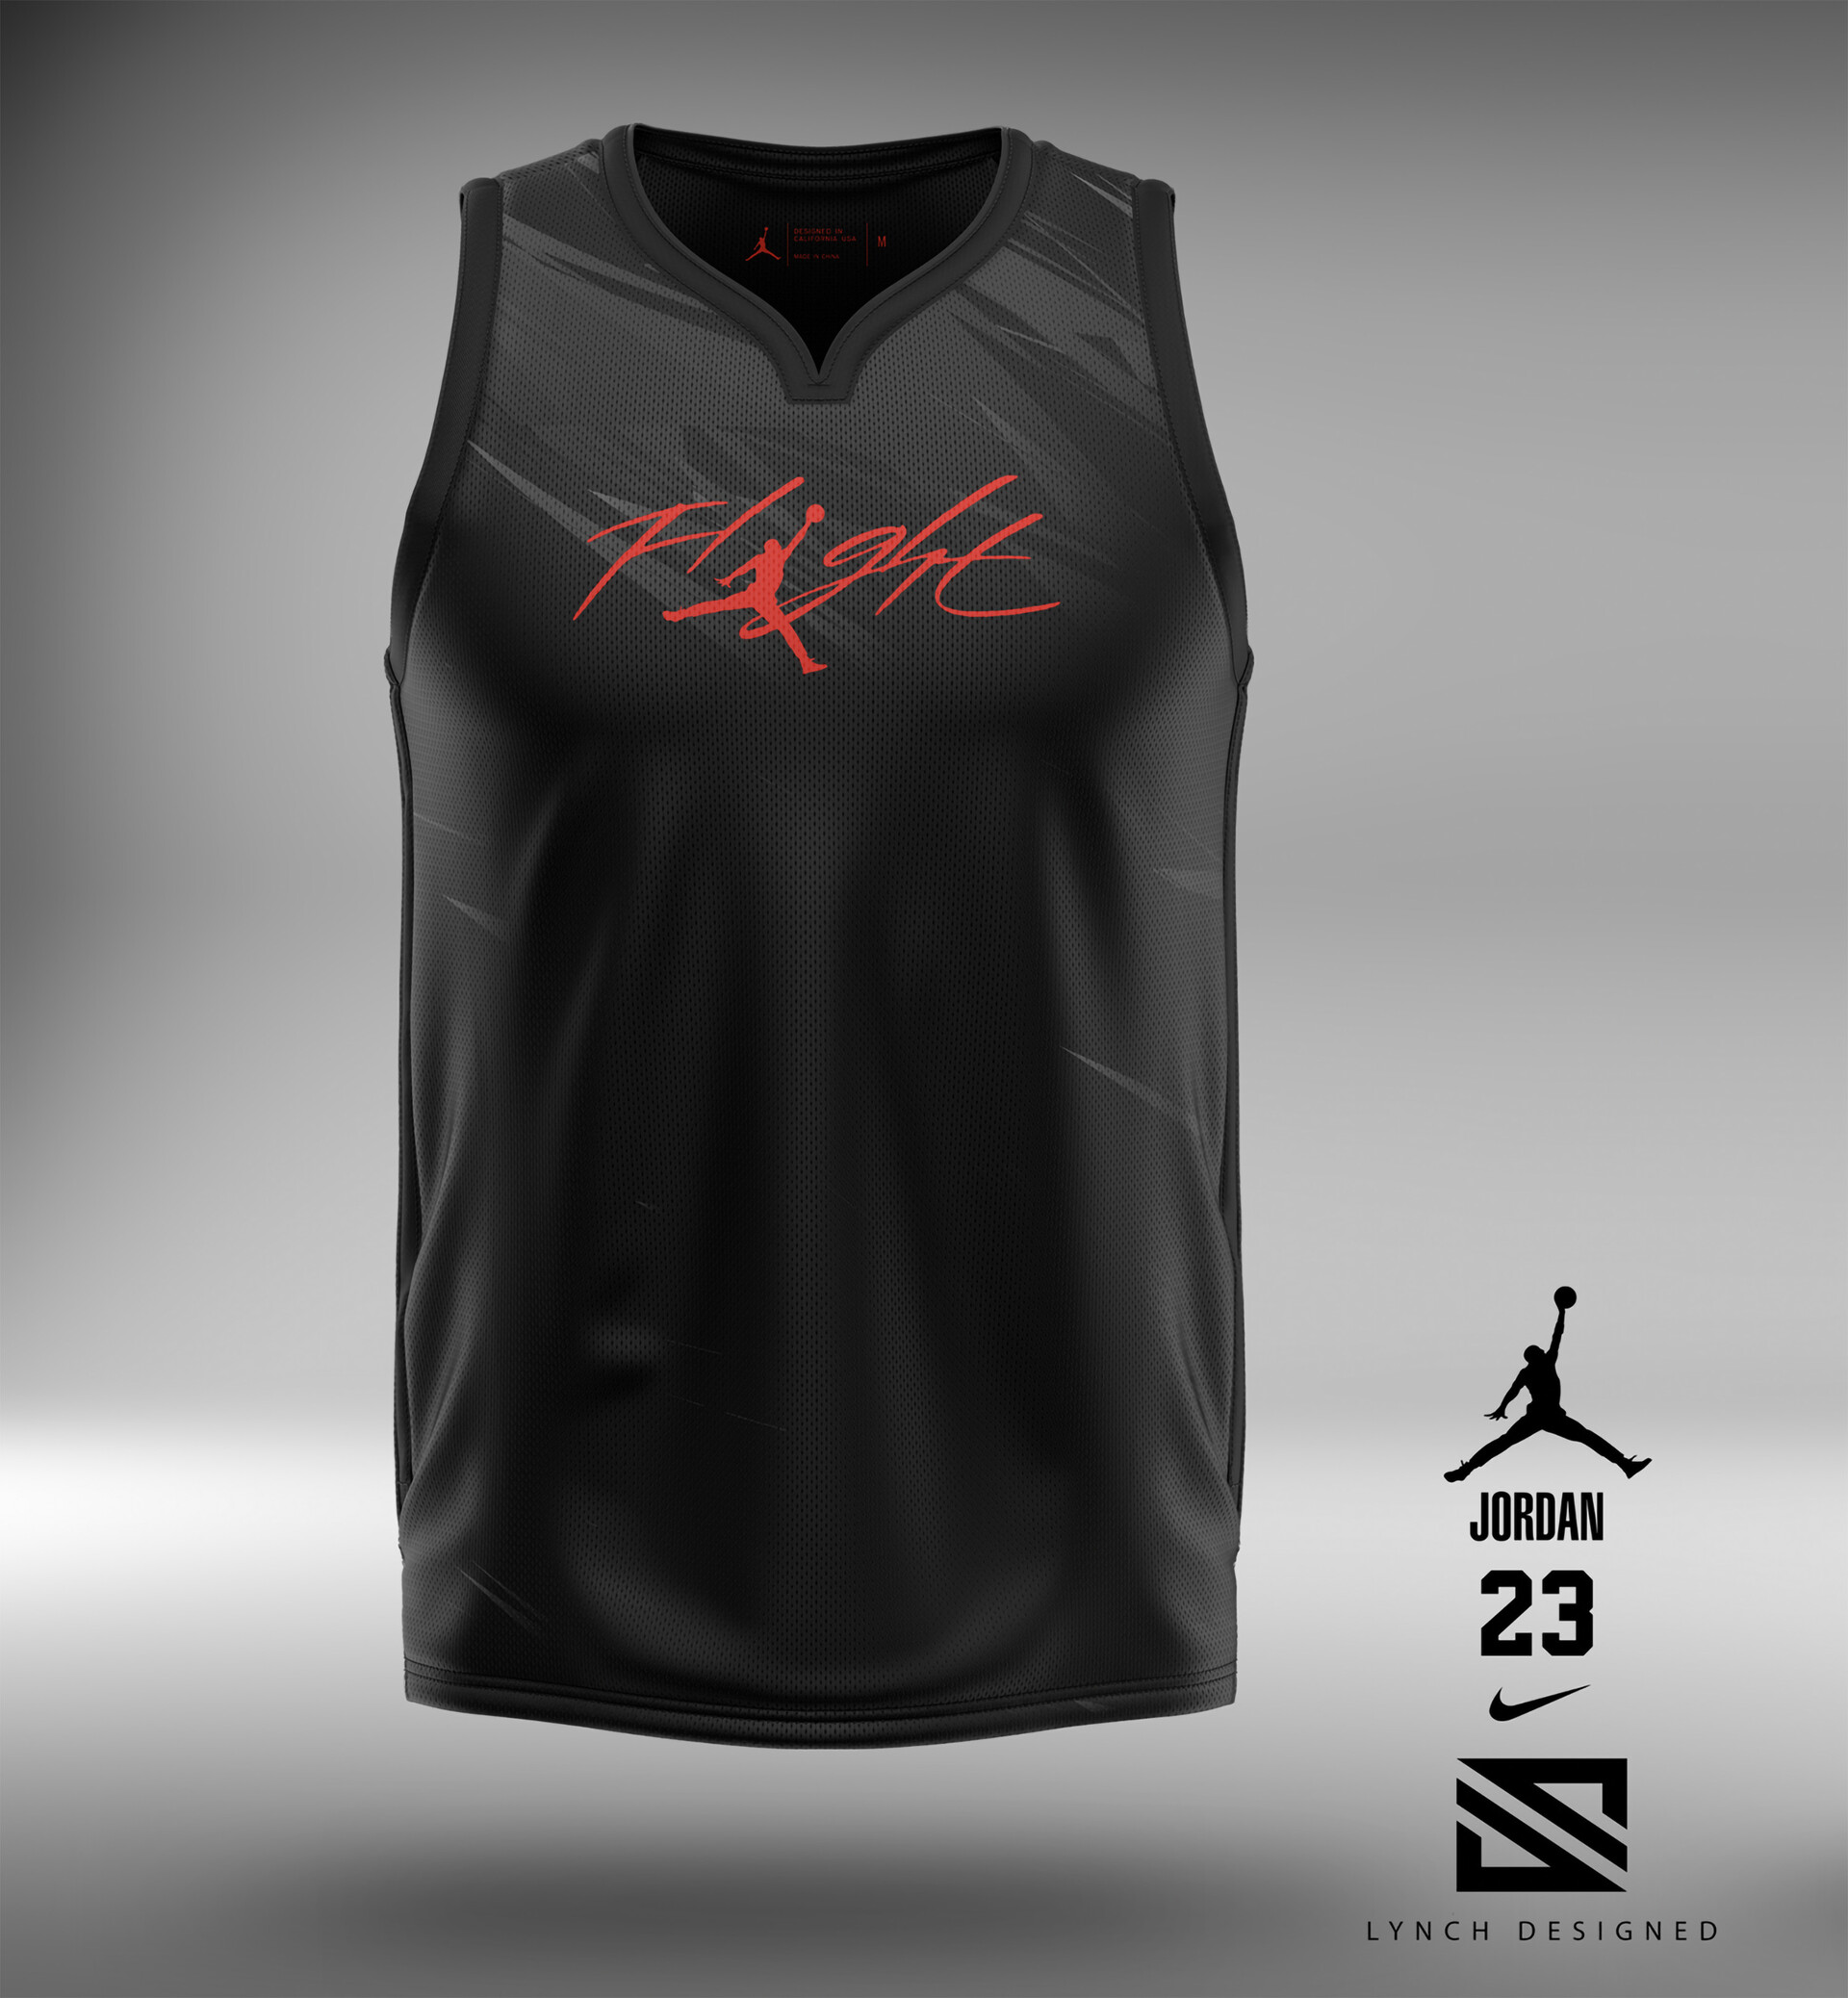 Lynch Designed - Jordan Brand Jumpman Lifestyle Geo Camo Basketball Jersey